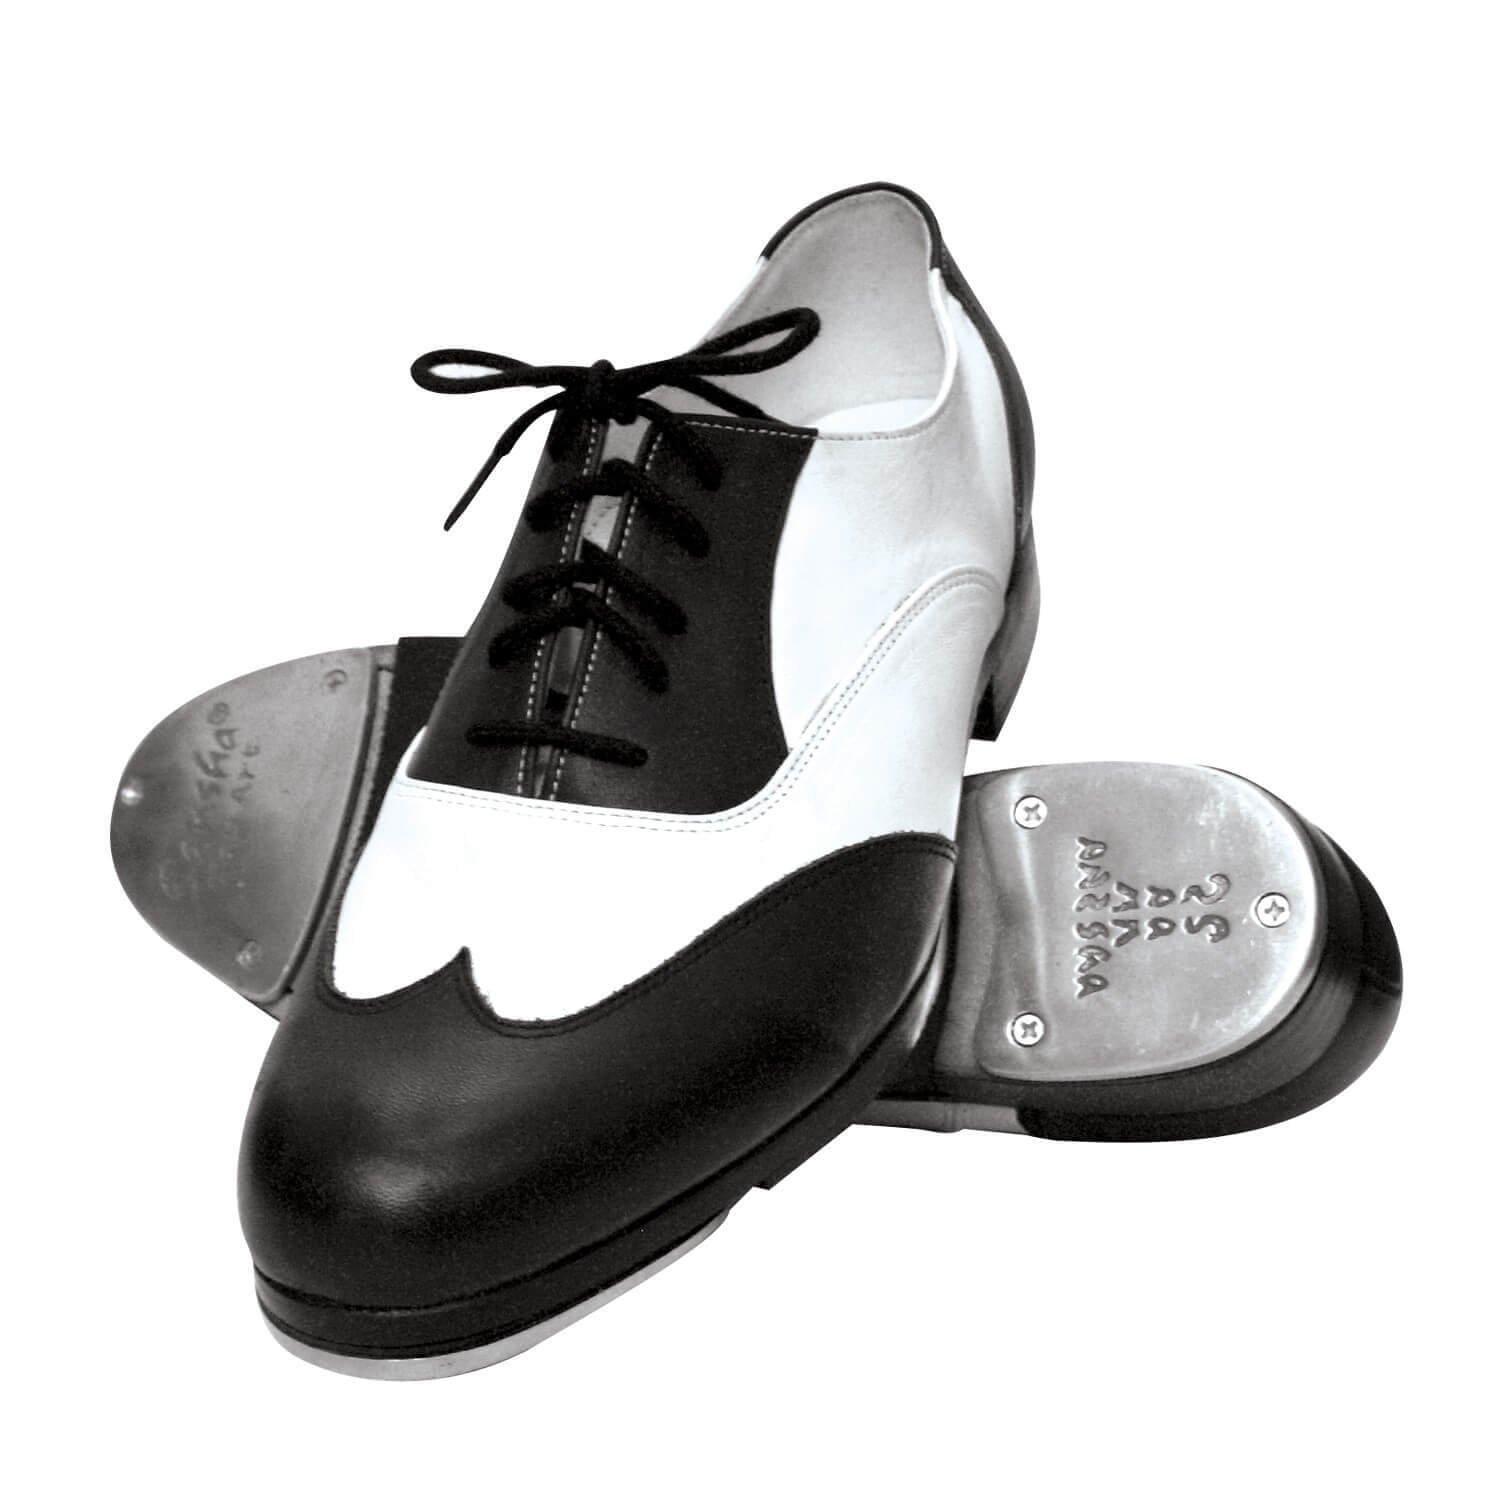 Sansha TA88L Leather Two-Tone Tap Shoes